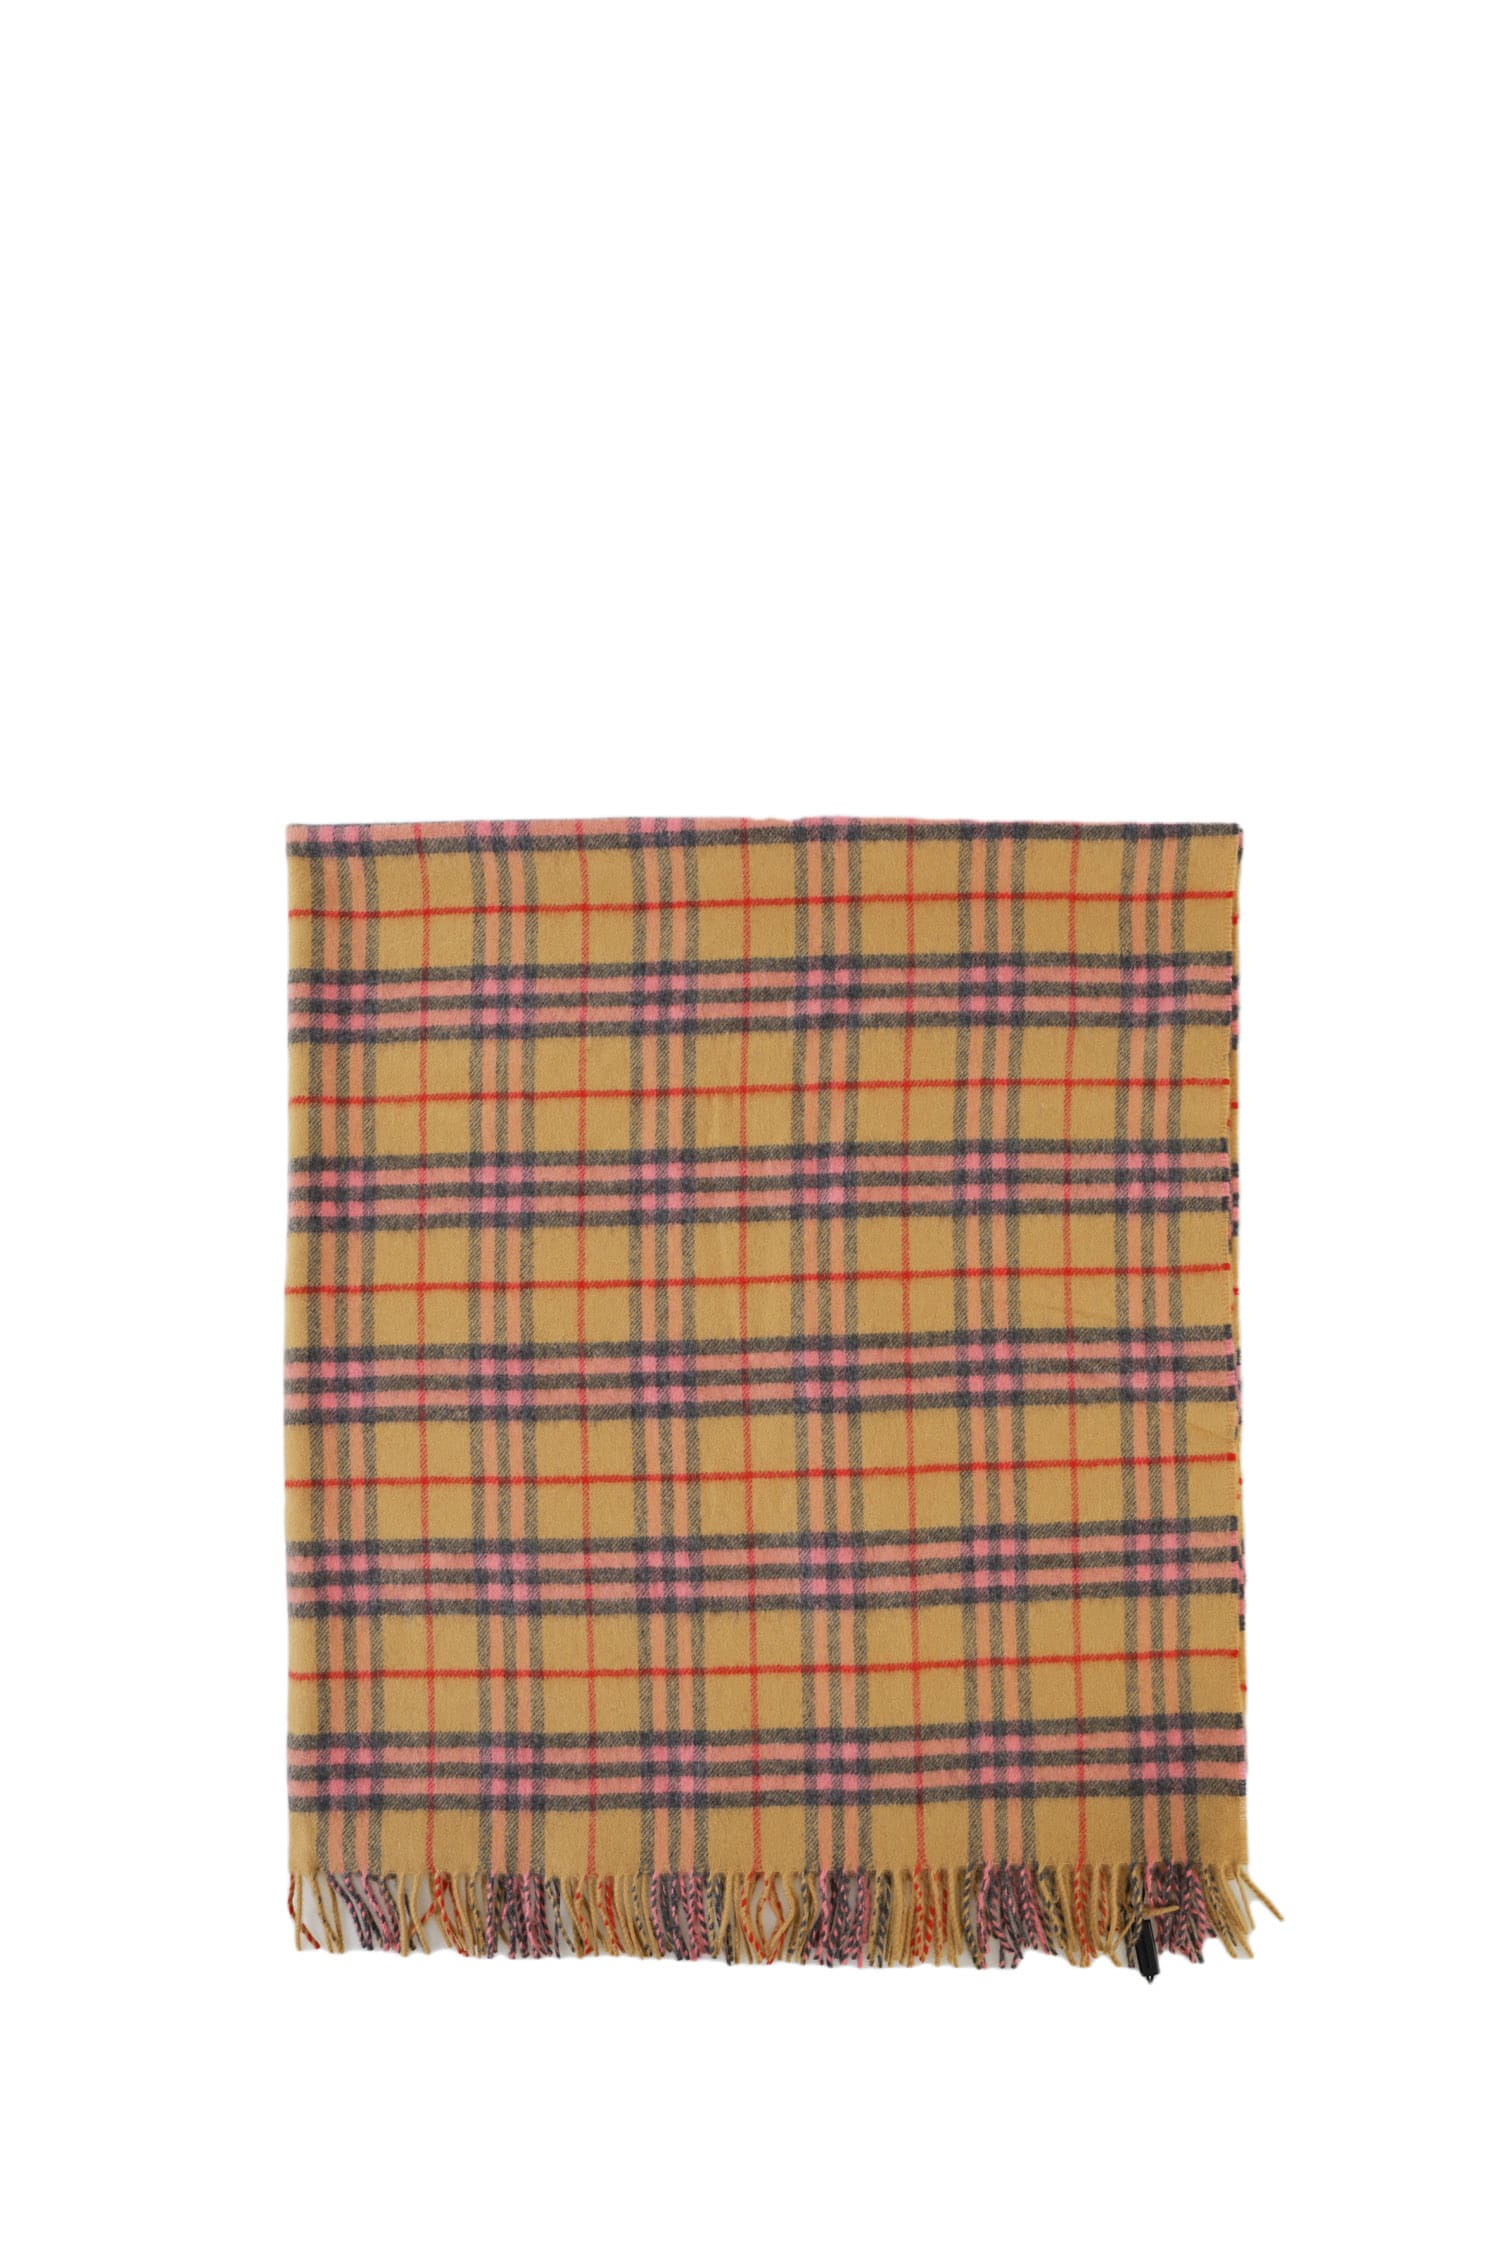 Burberry Cashmere Blanket | italist